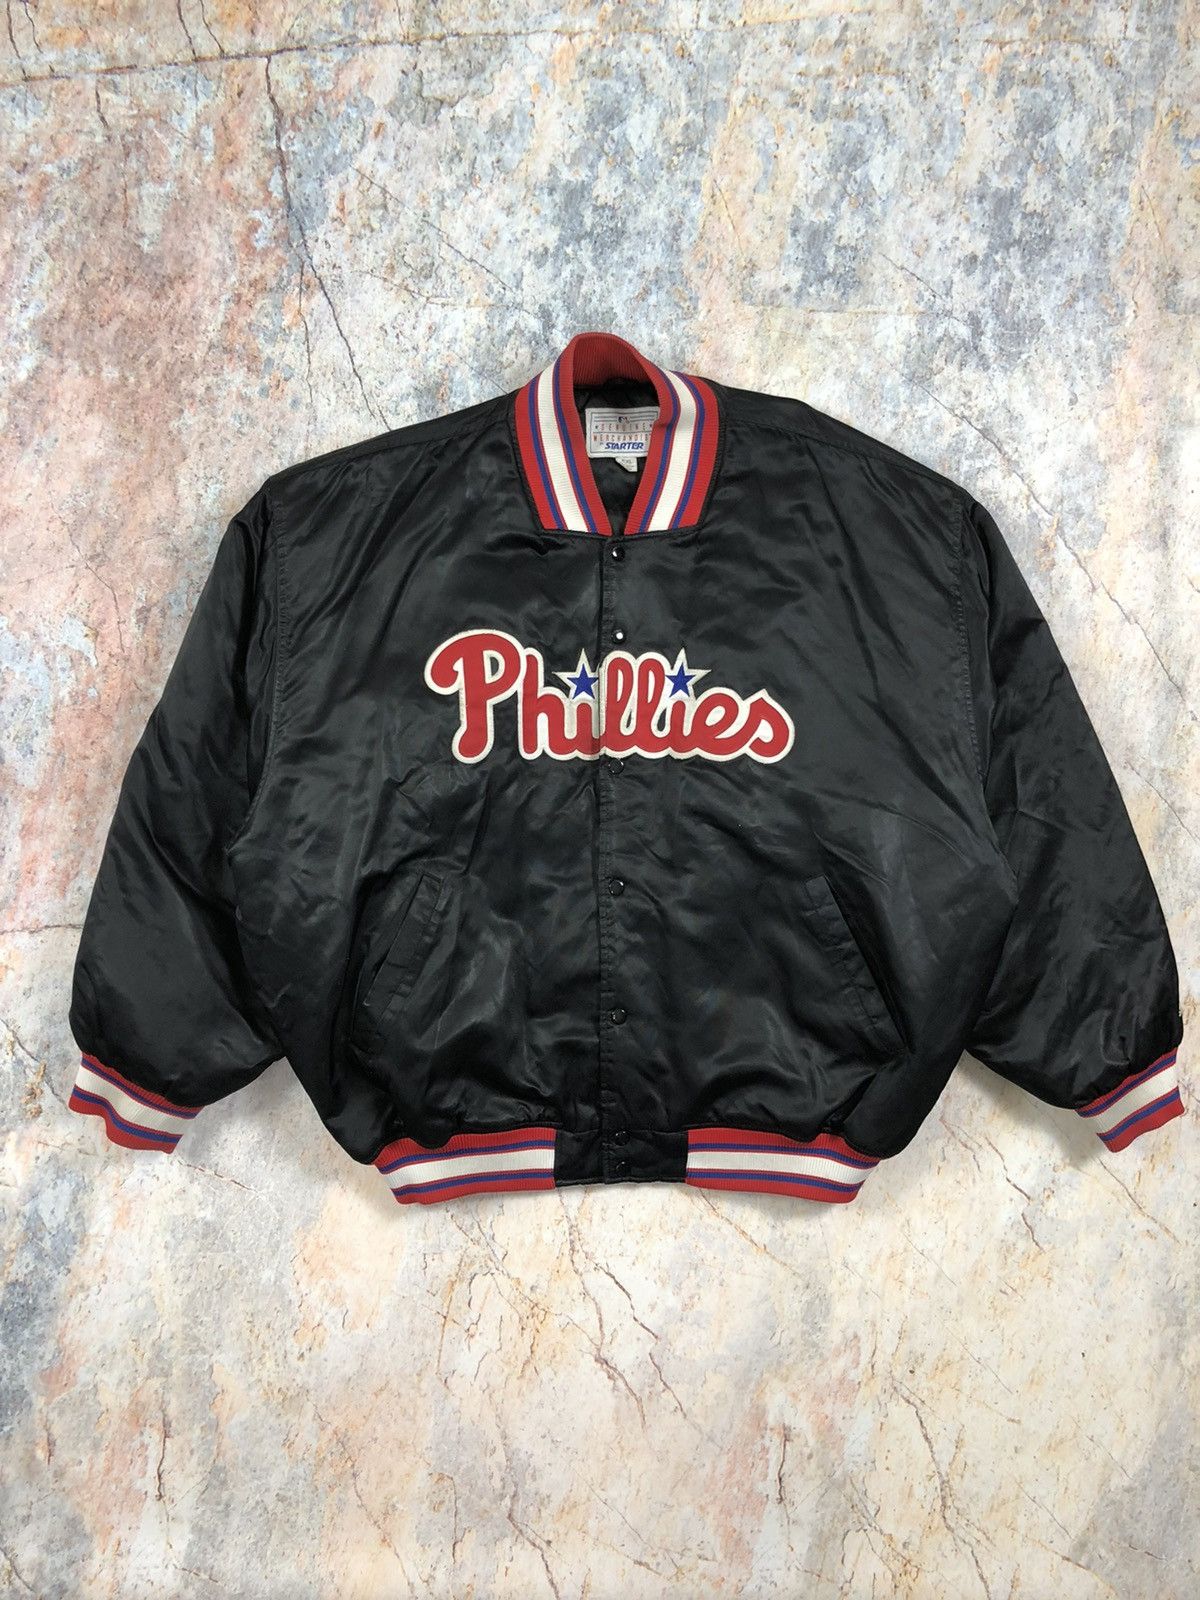 Vintage Phillies vintage bomber jacket | Grailed